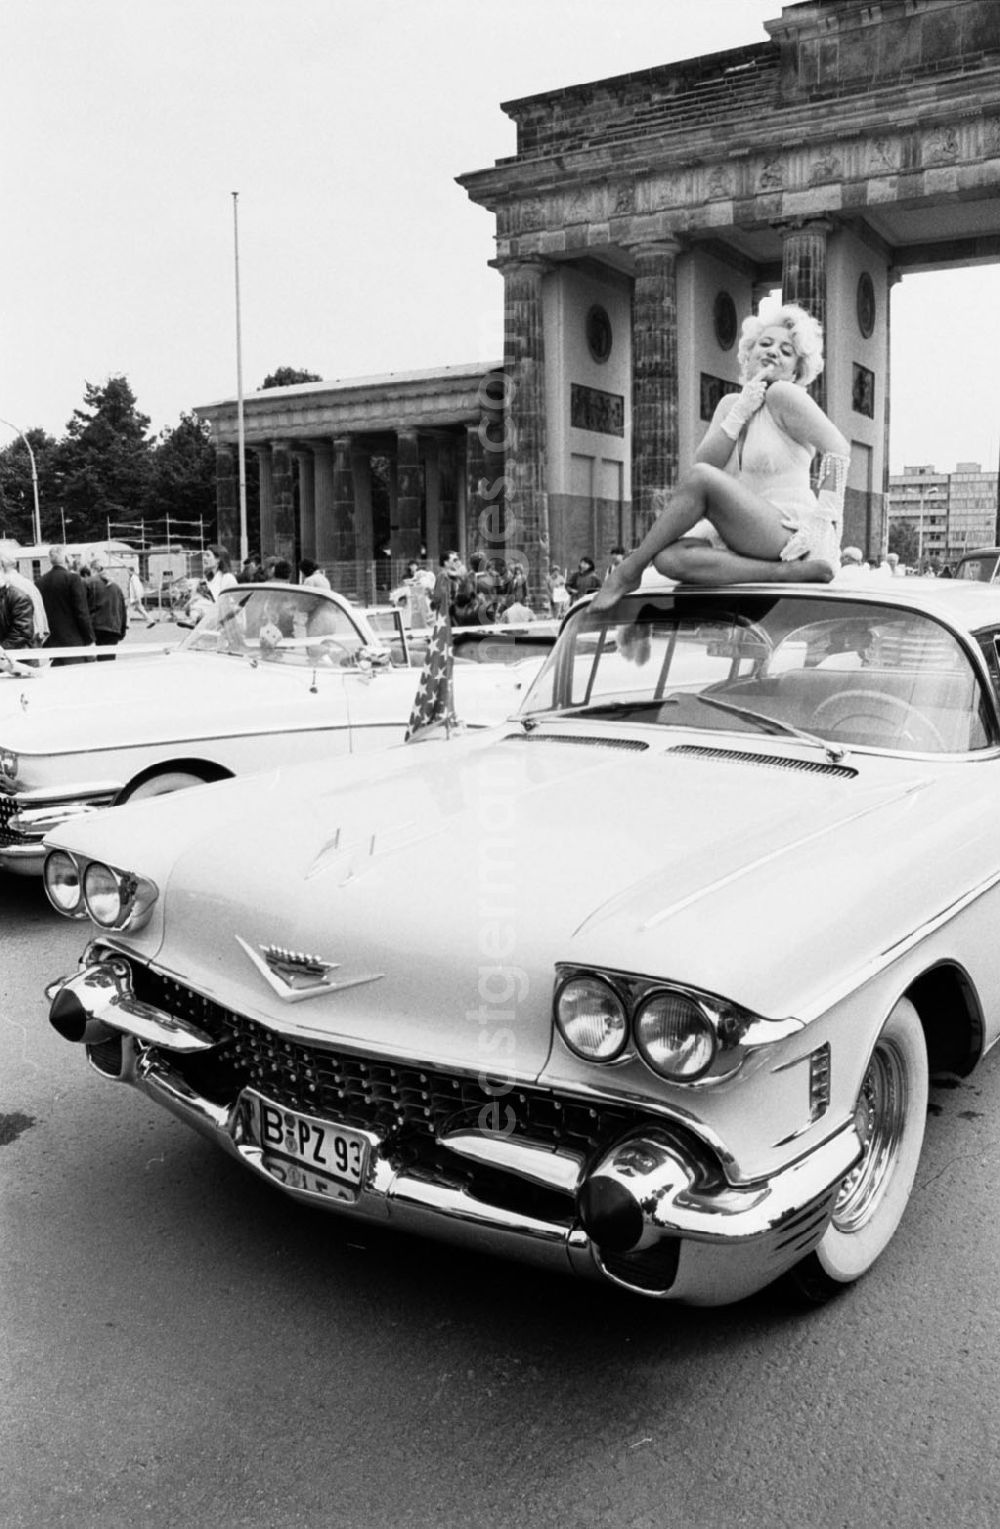 GDR photo archive: - Marilyn Monroe am Brandenburger Tor Umschlagnummer: 7443